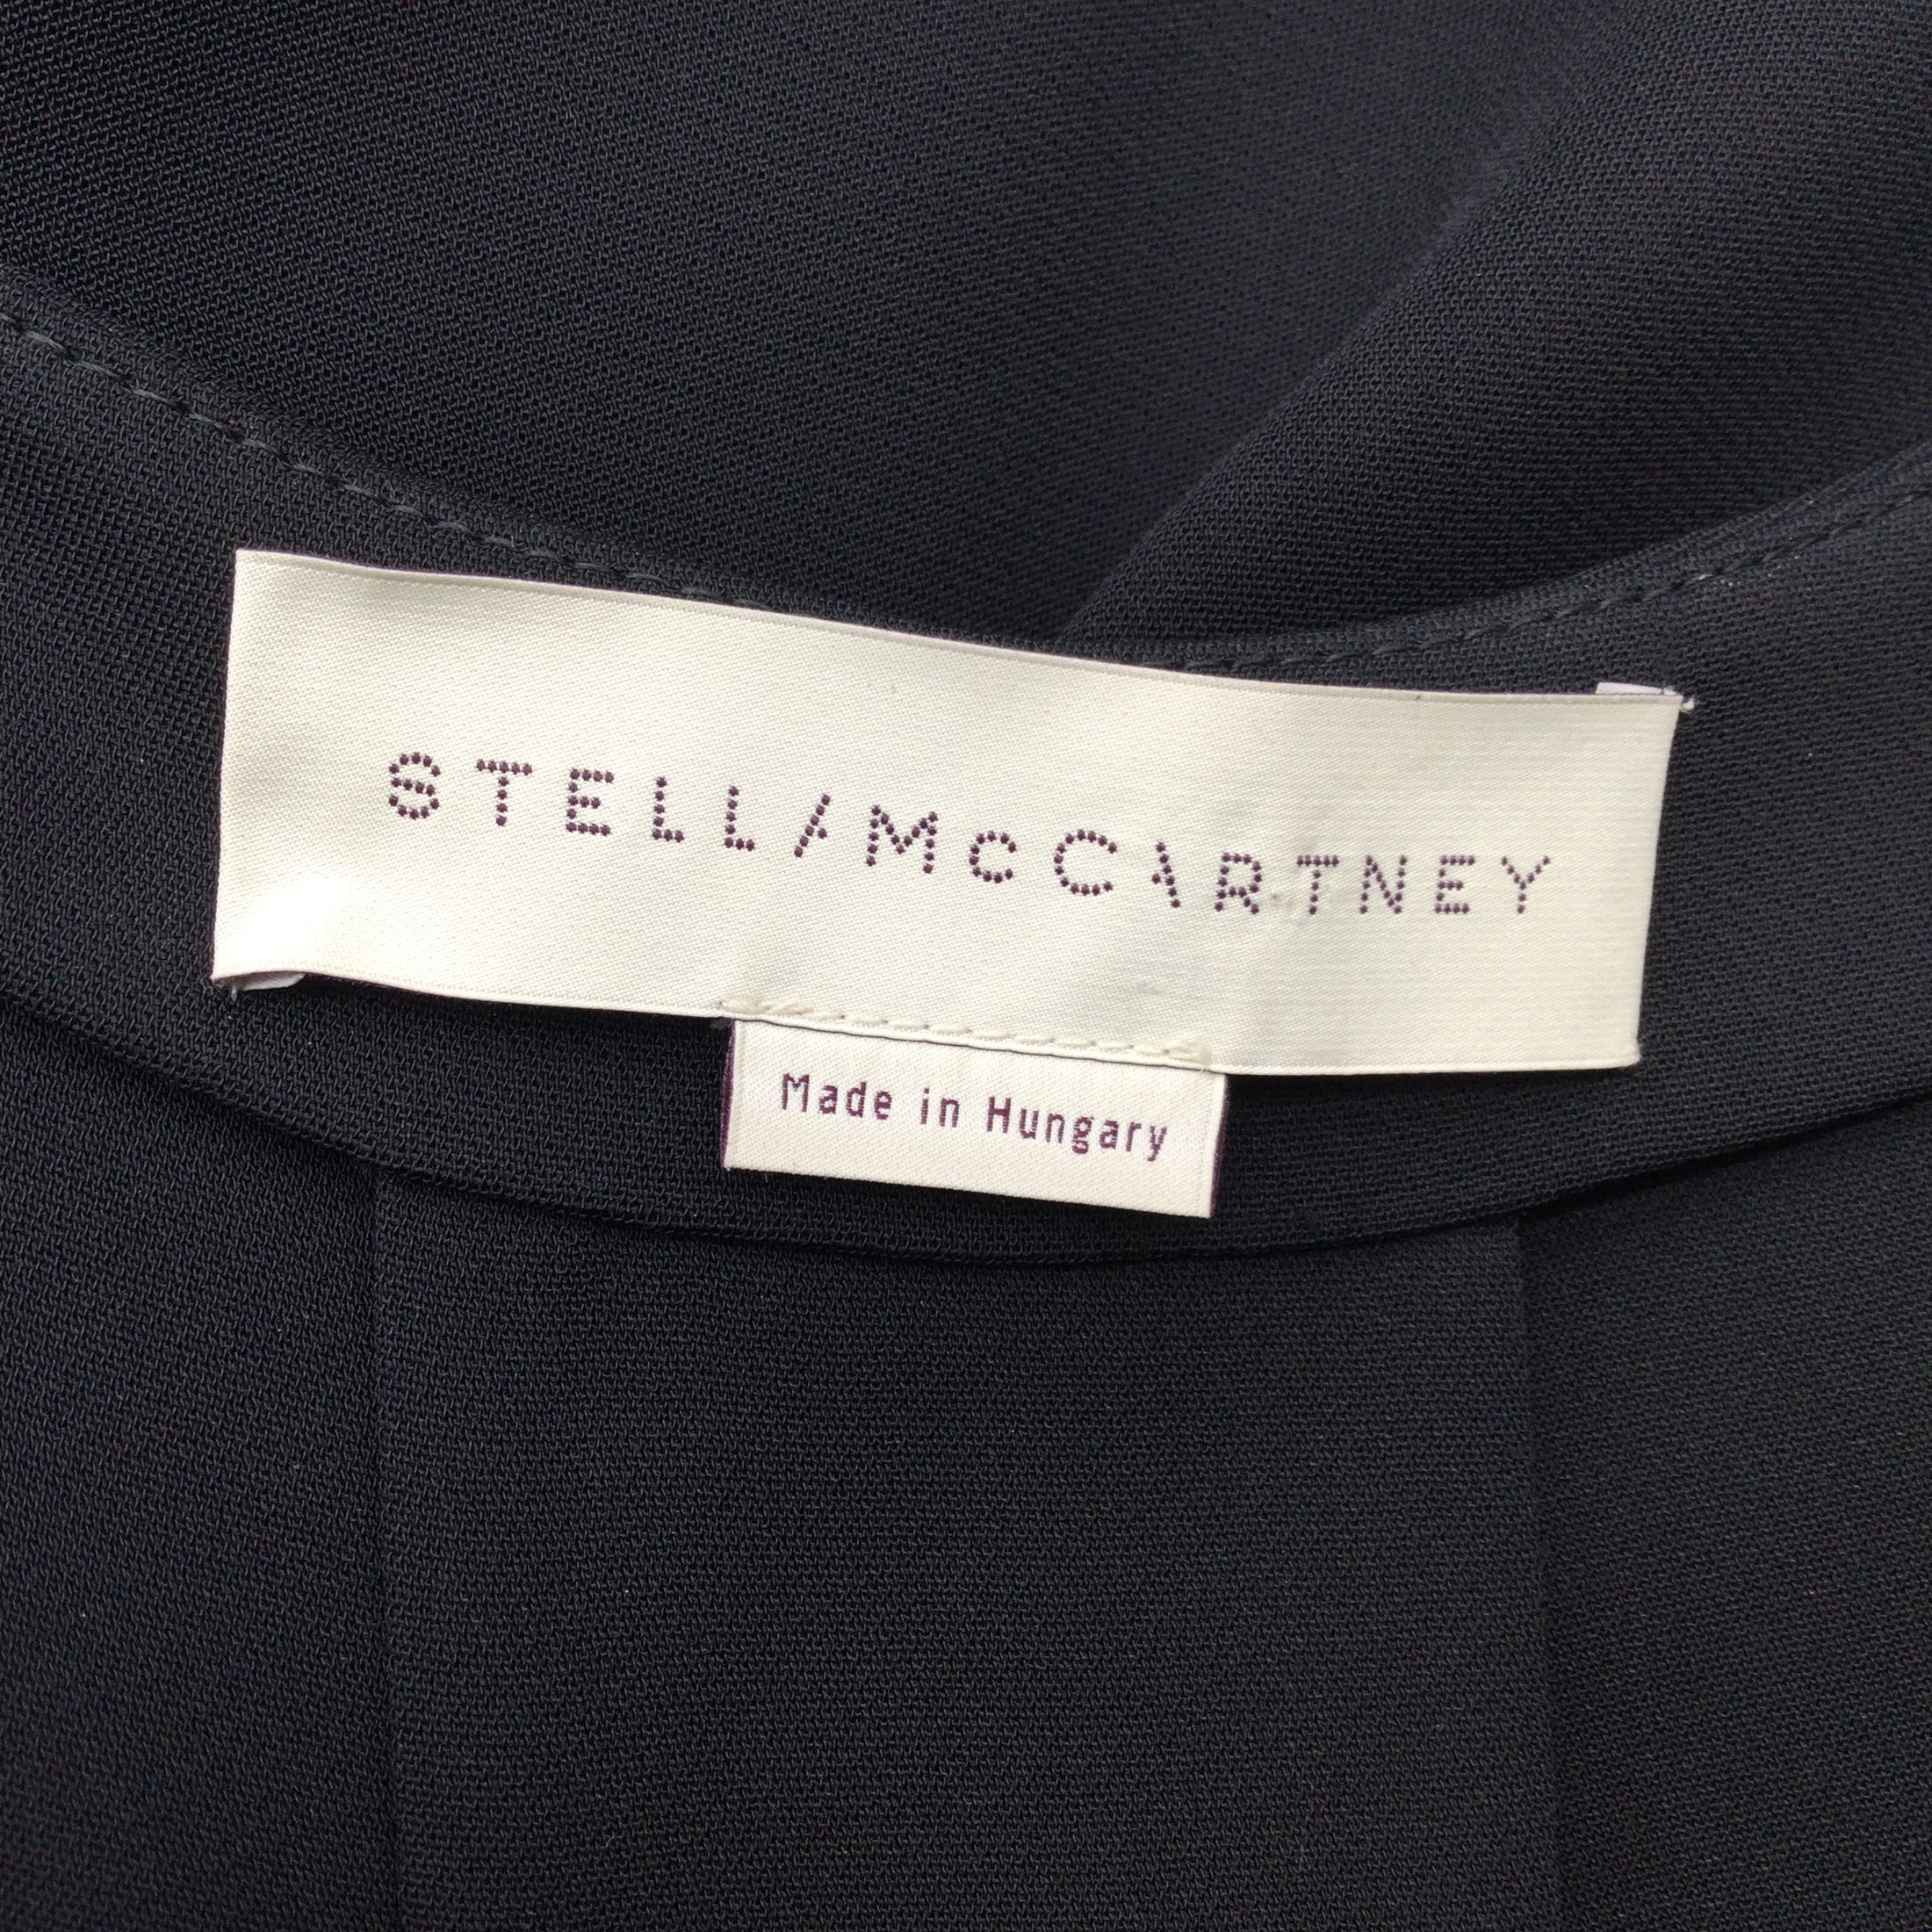 Stella McCartney Black Sleeveless Silk Dress